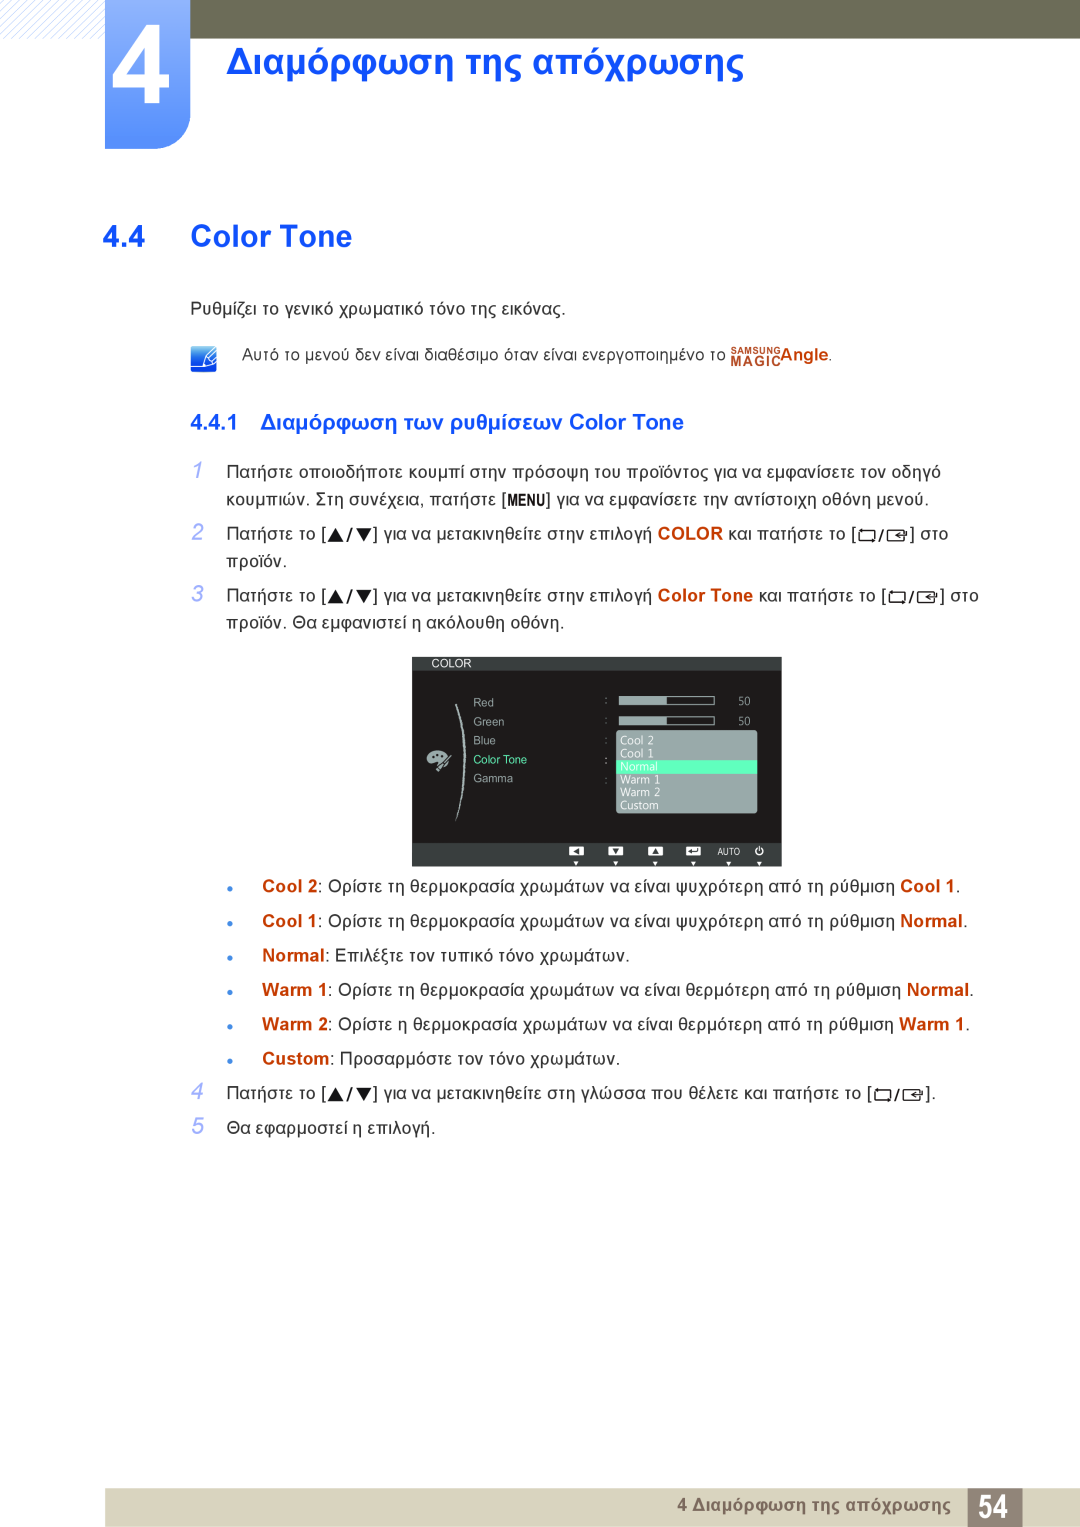 Samsung LS19C45KBW/EN, LS22C45KMS/EN manual 4.4.1 Διαμόρφωση των ρυθμίσεων Color Tone, 4 Διαμόρφωση της απόχρωσης 